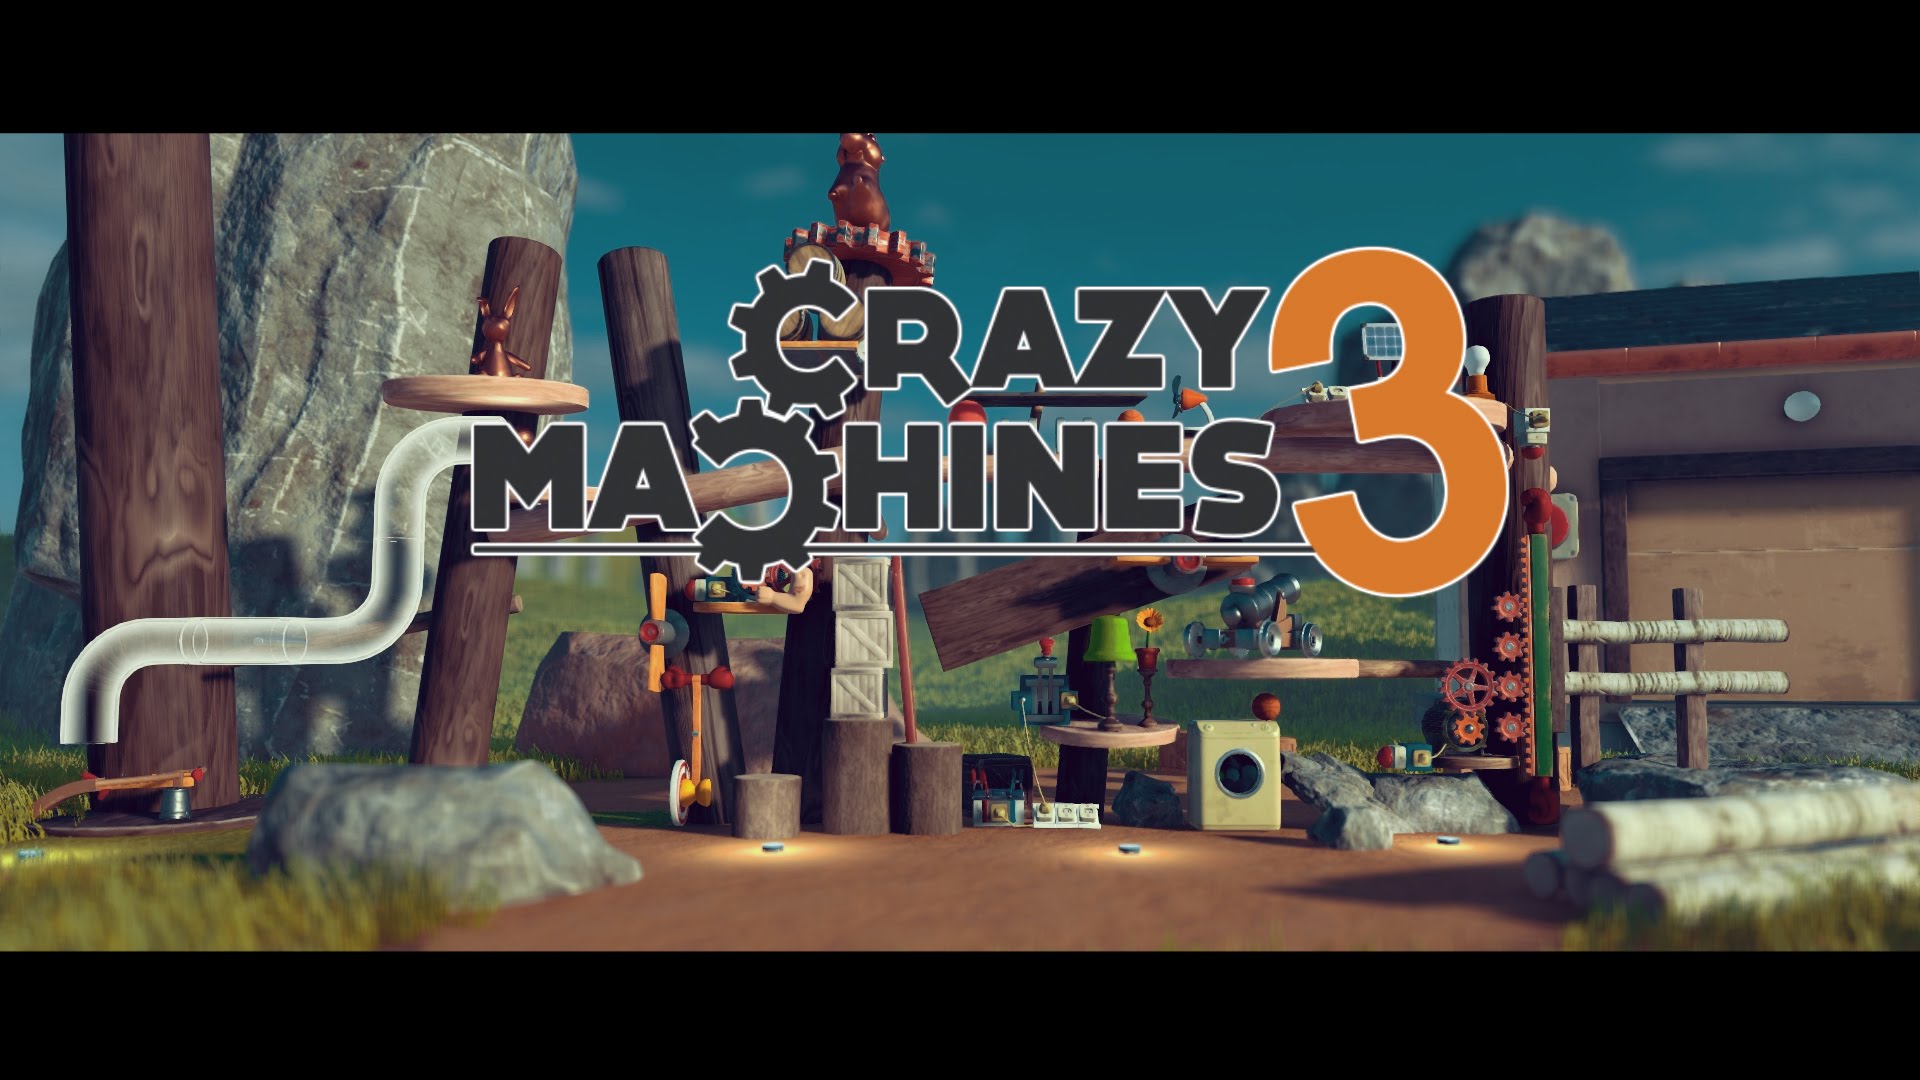 Crazy Machines 3 - Release Date Teaser